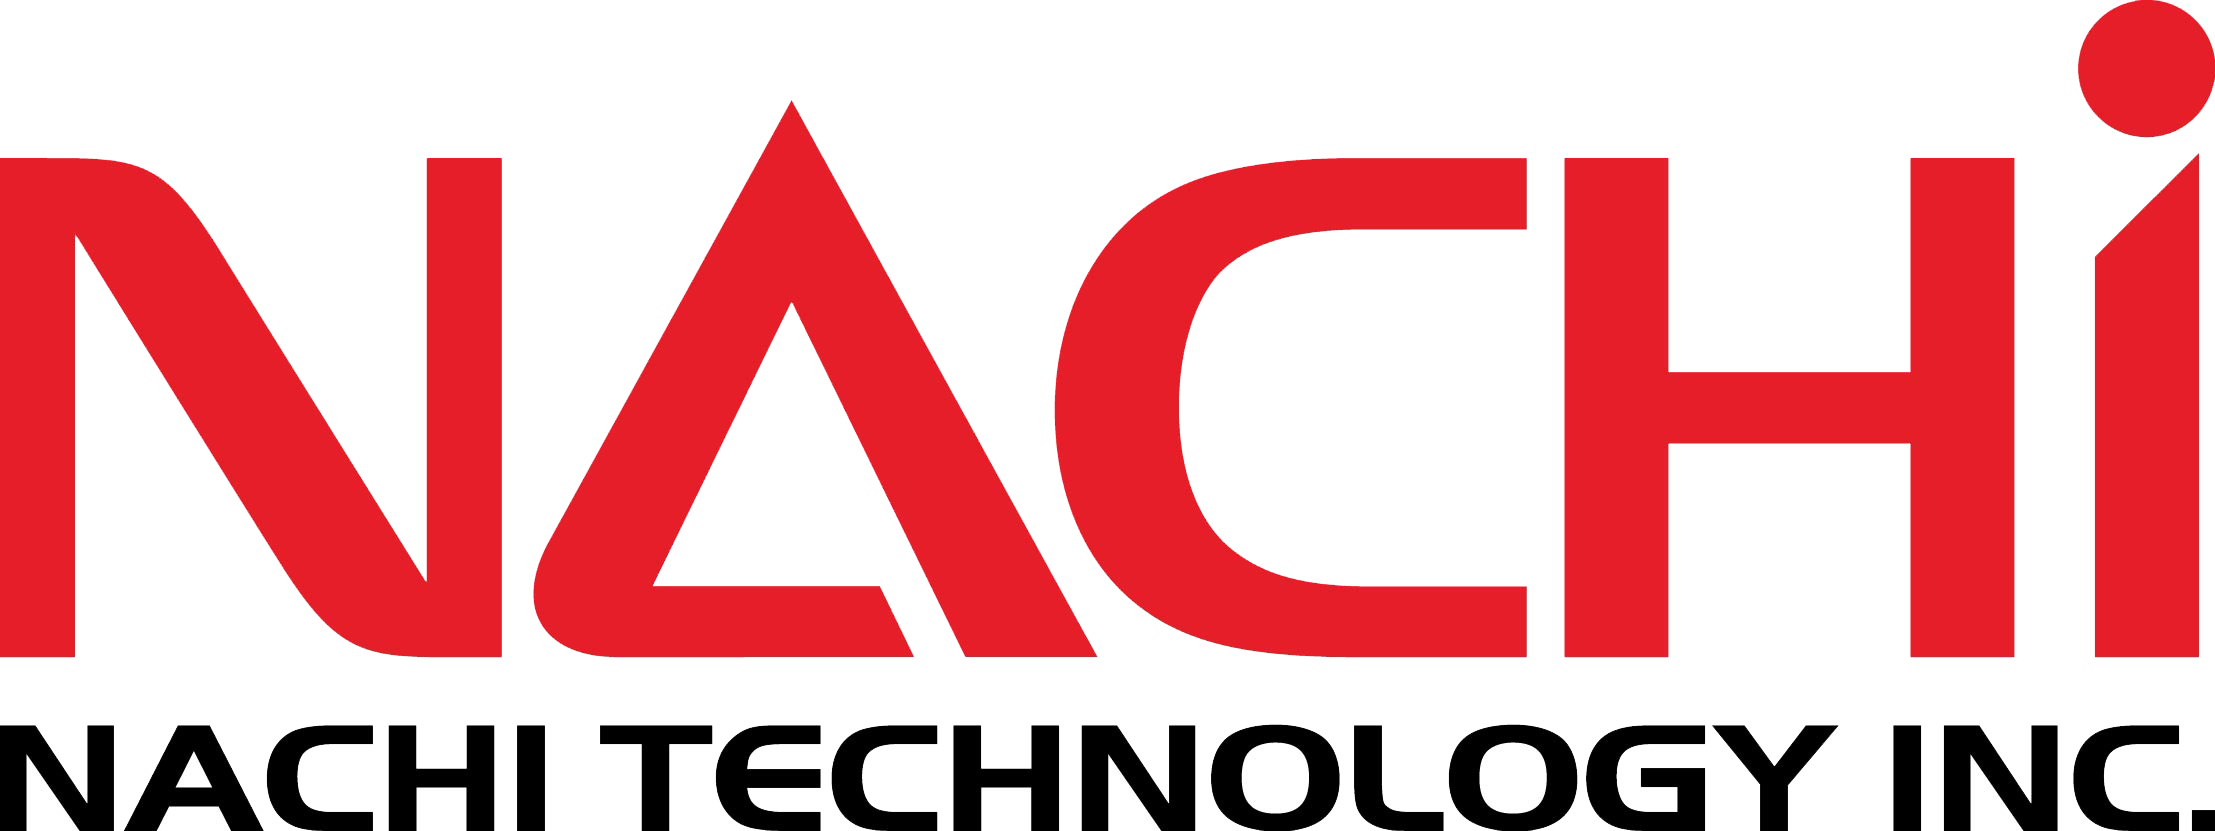 Nachi Technology Inc.